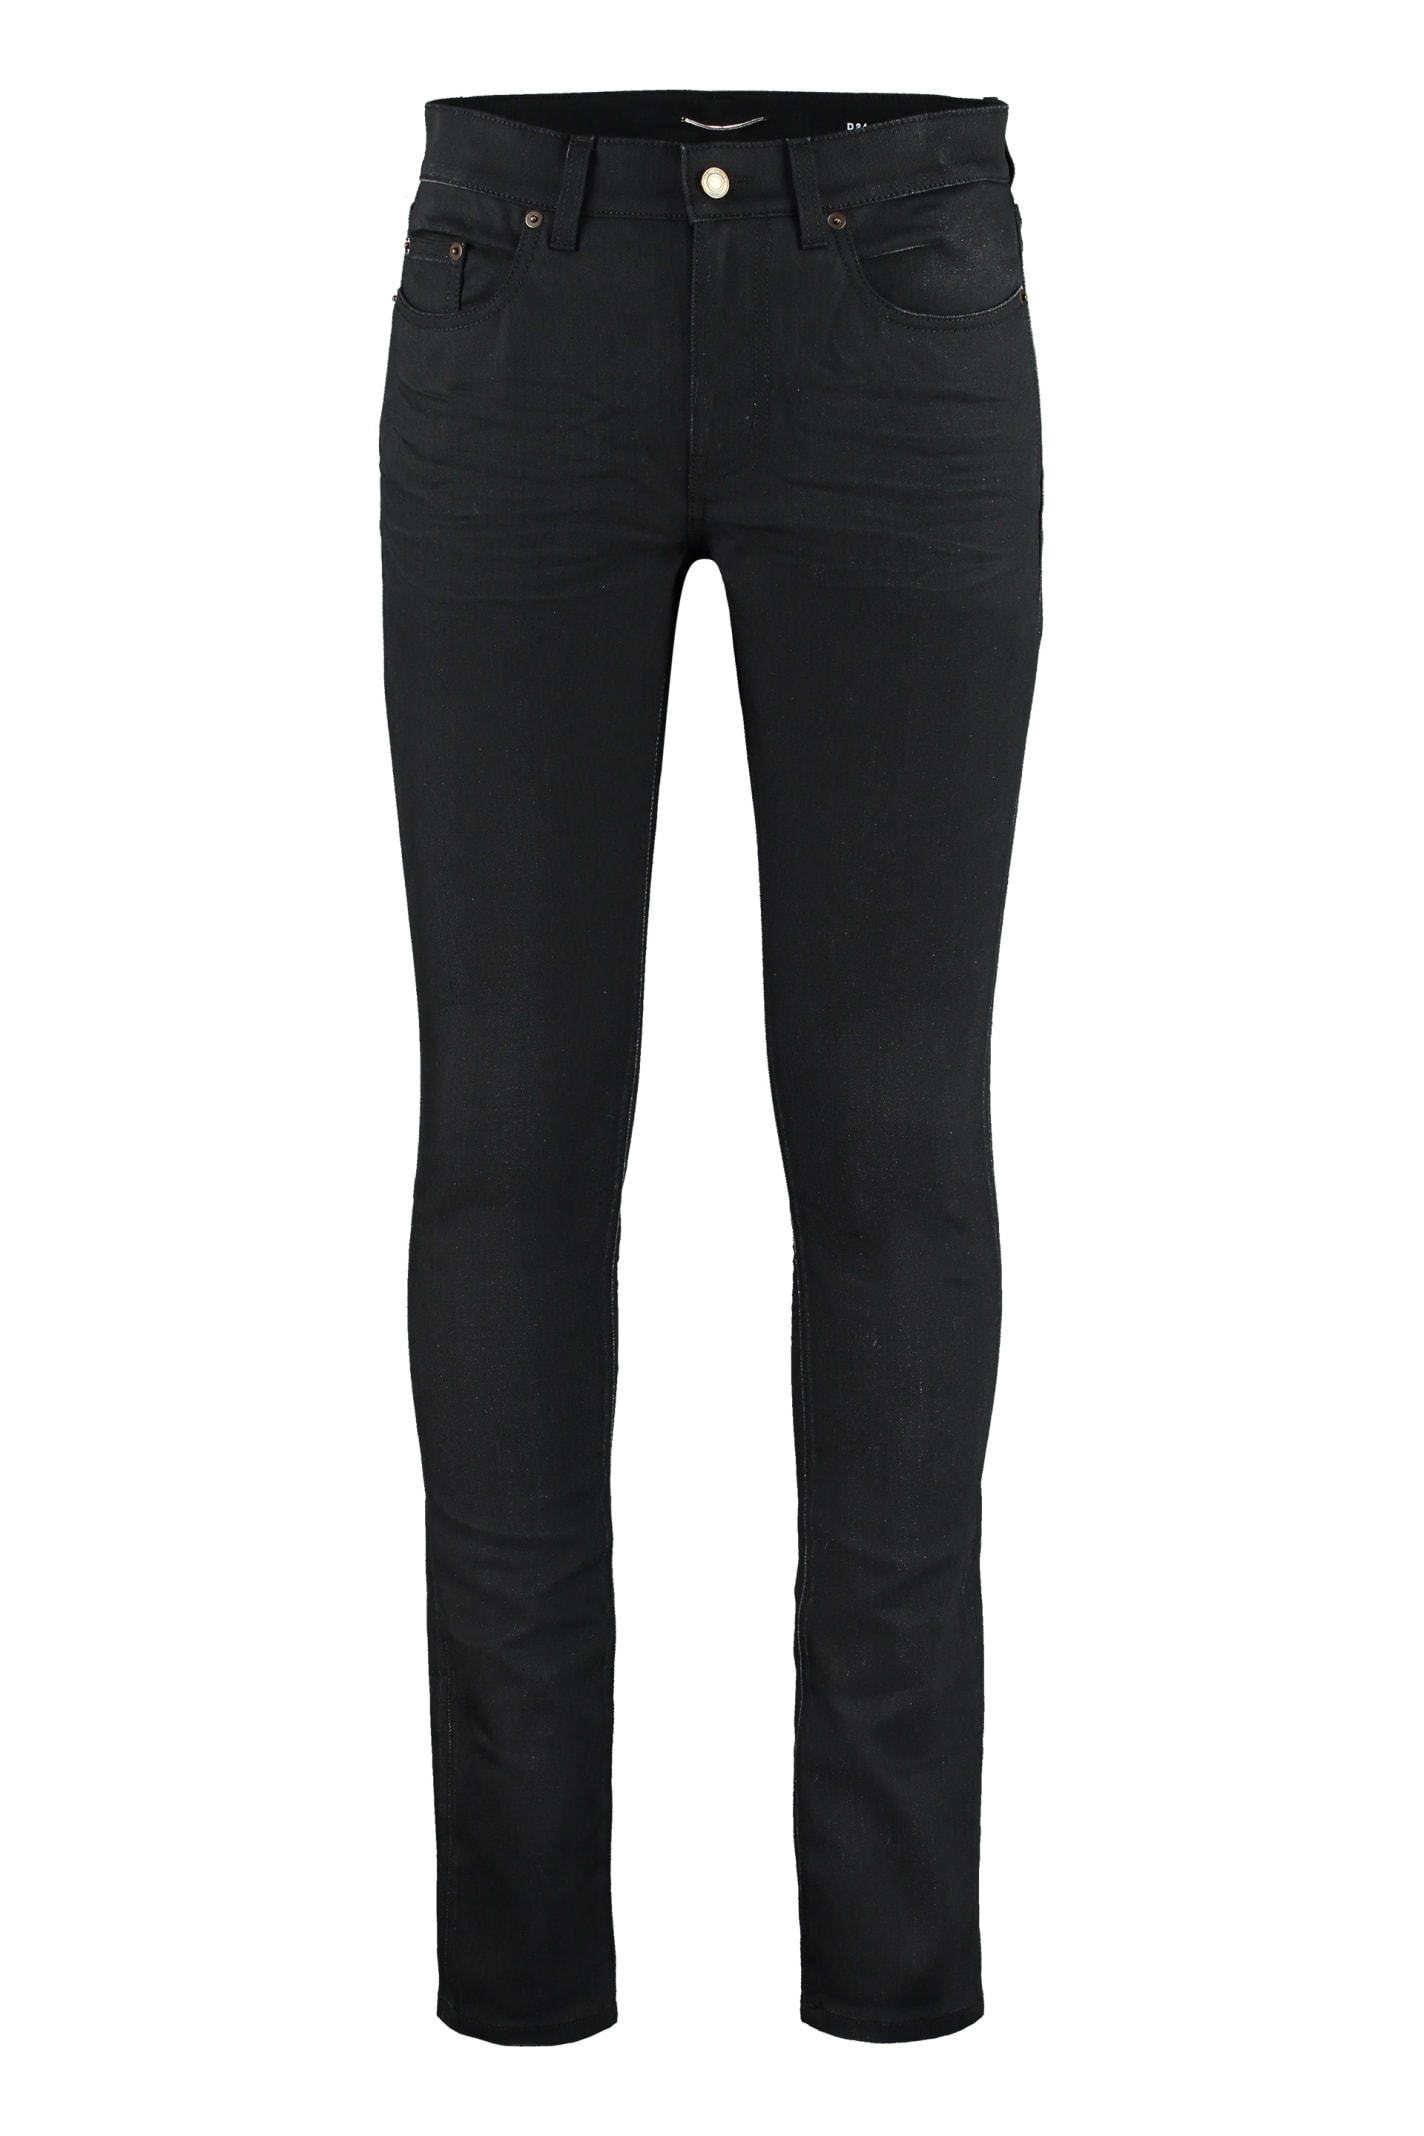 Saint Laurent 5-pocket Skinny Jeans